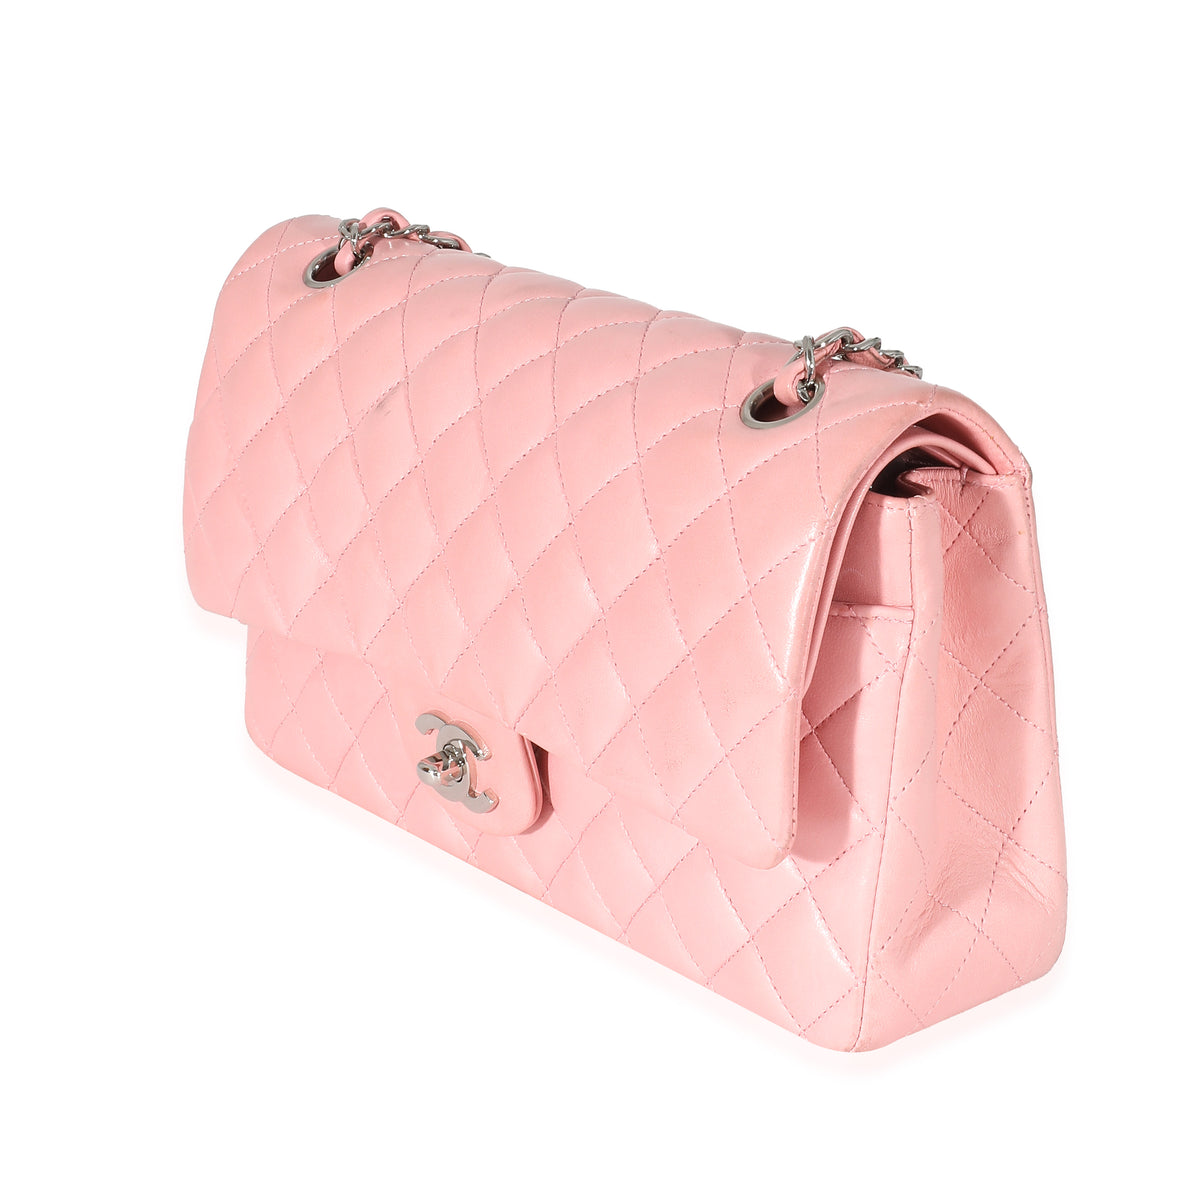 Chanel Pink Lambskin Medium Classic Double Flap Bag